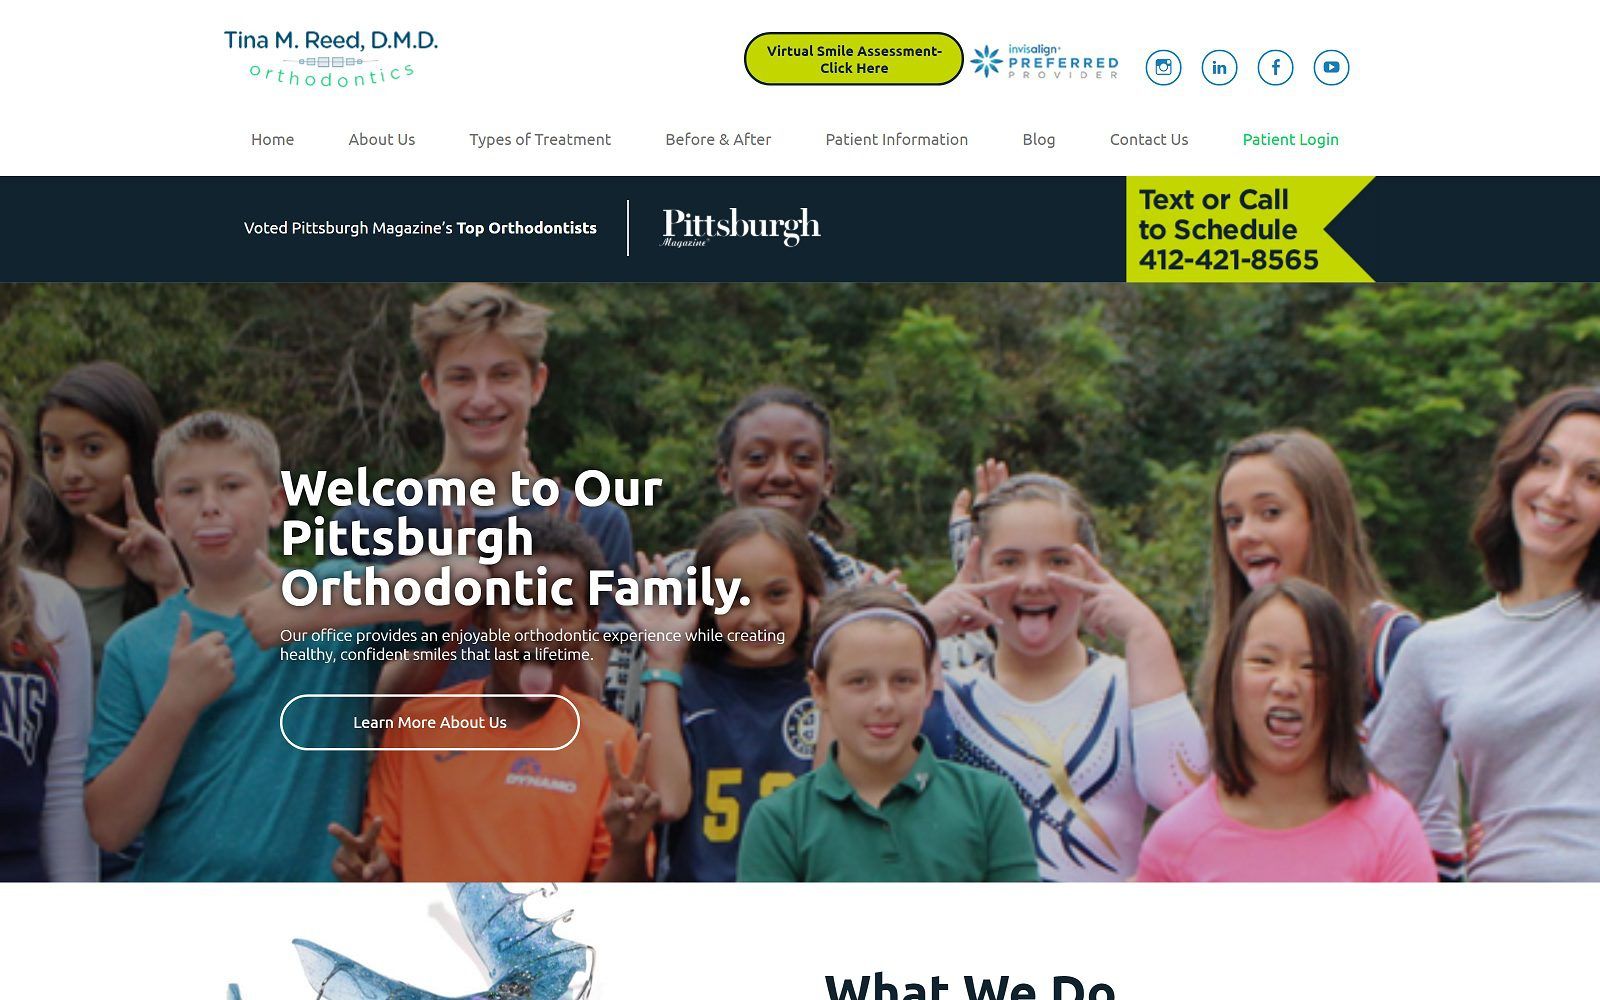 The screenshot of tina reed orthodontics website